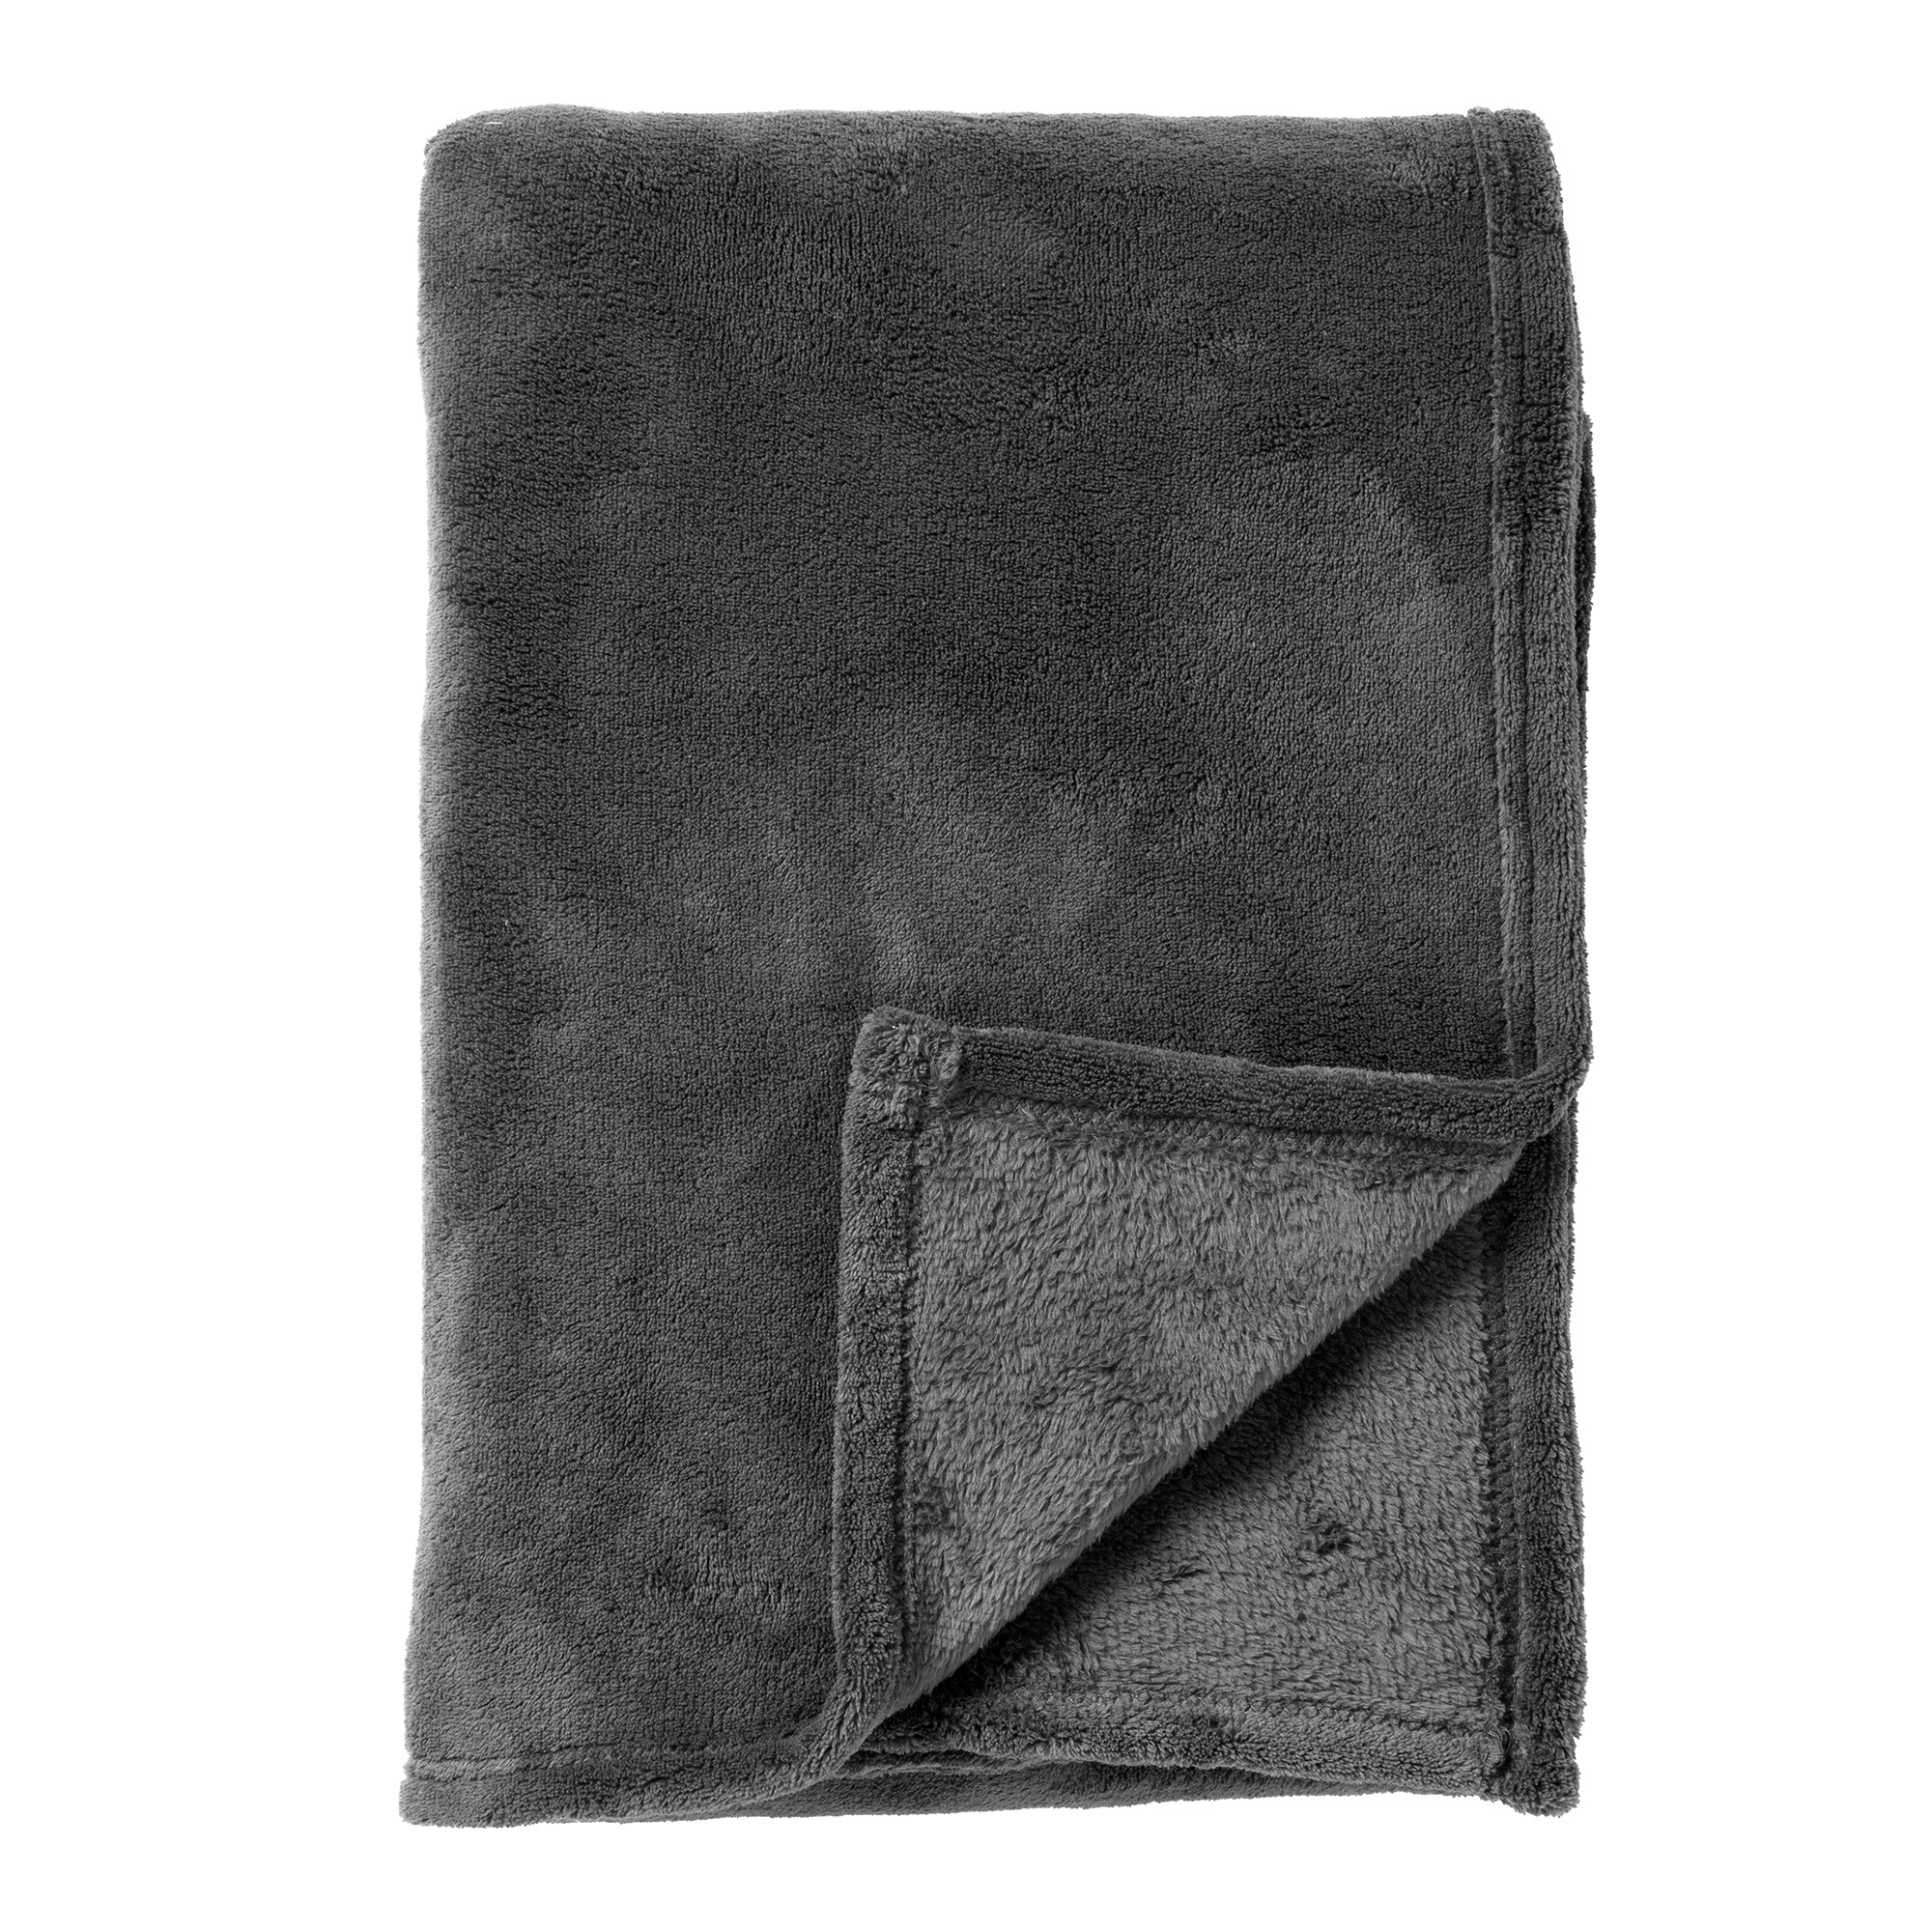 SIDNEY - Plaid 140x180 cm - Fleece deken van 100% gerecycled polyester – superzacht - Eco Line collectie - Charcoal Gray - antraciet